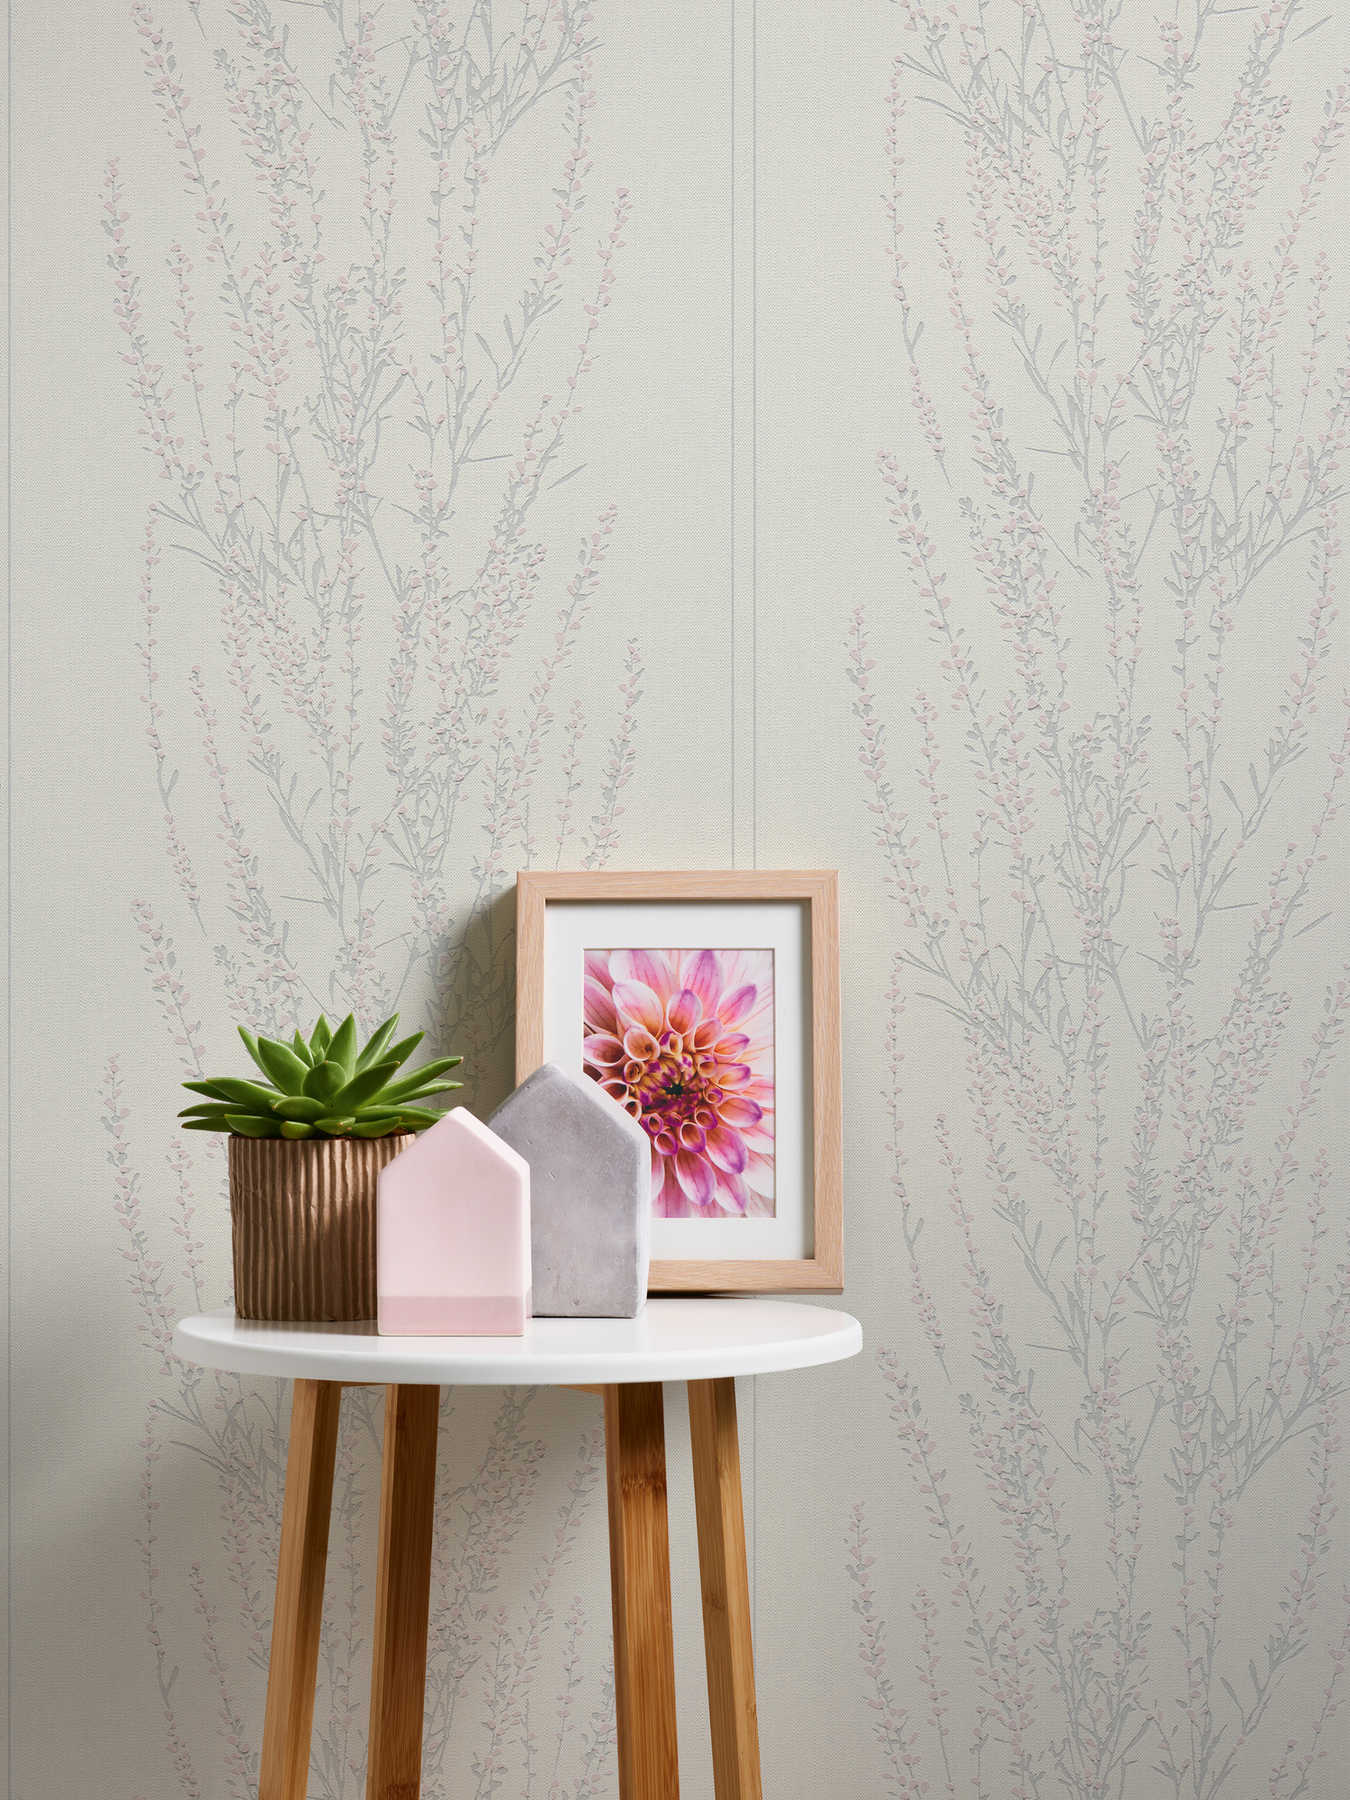             Wallpaper leaf pattern textured, 3D effect - grey, metallic, pink
        